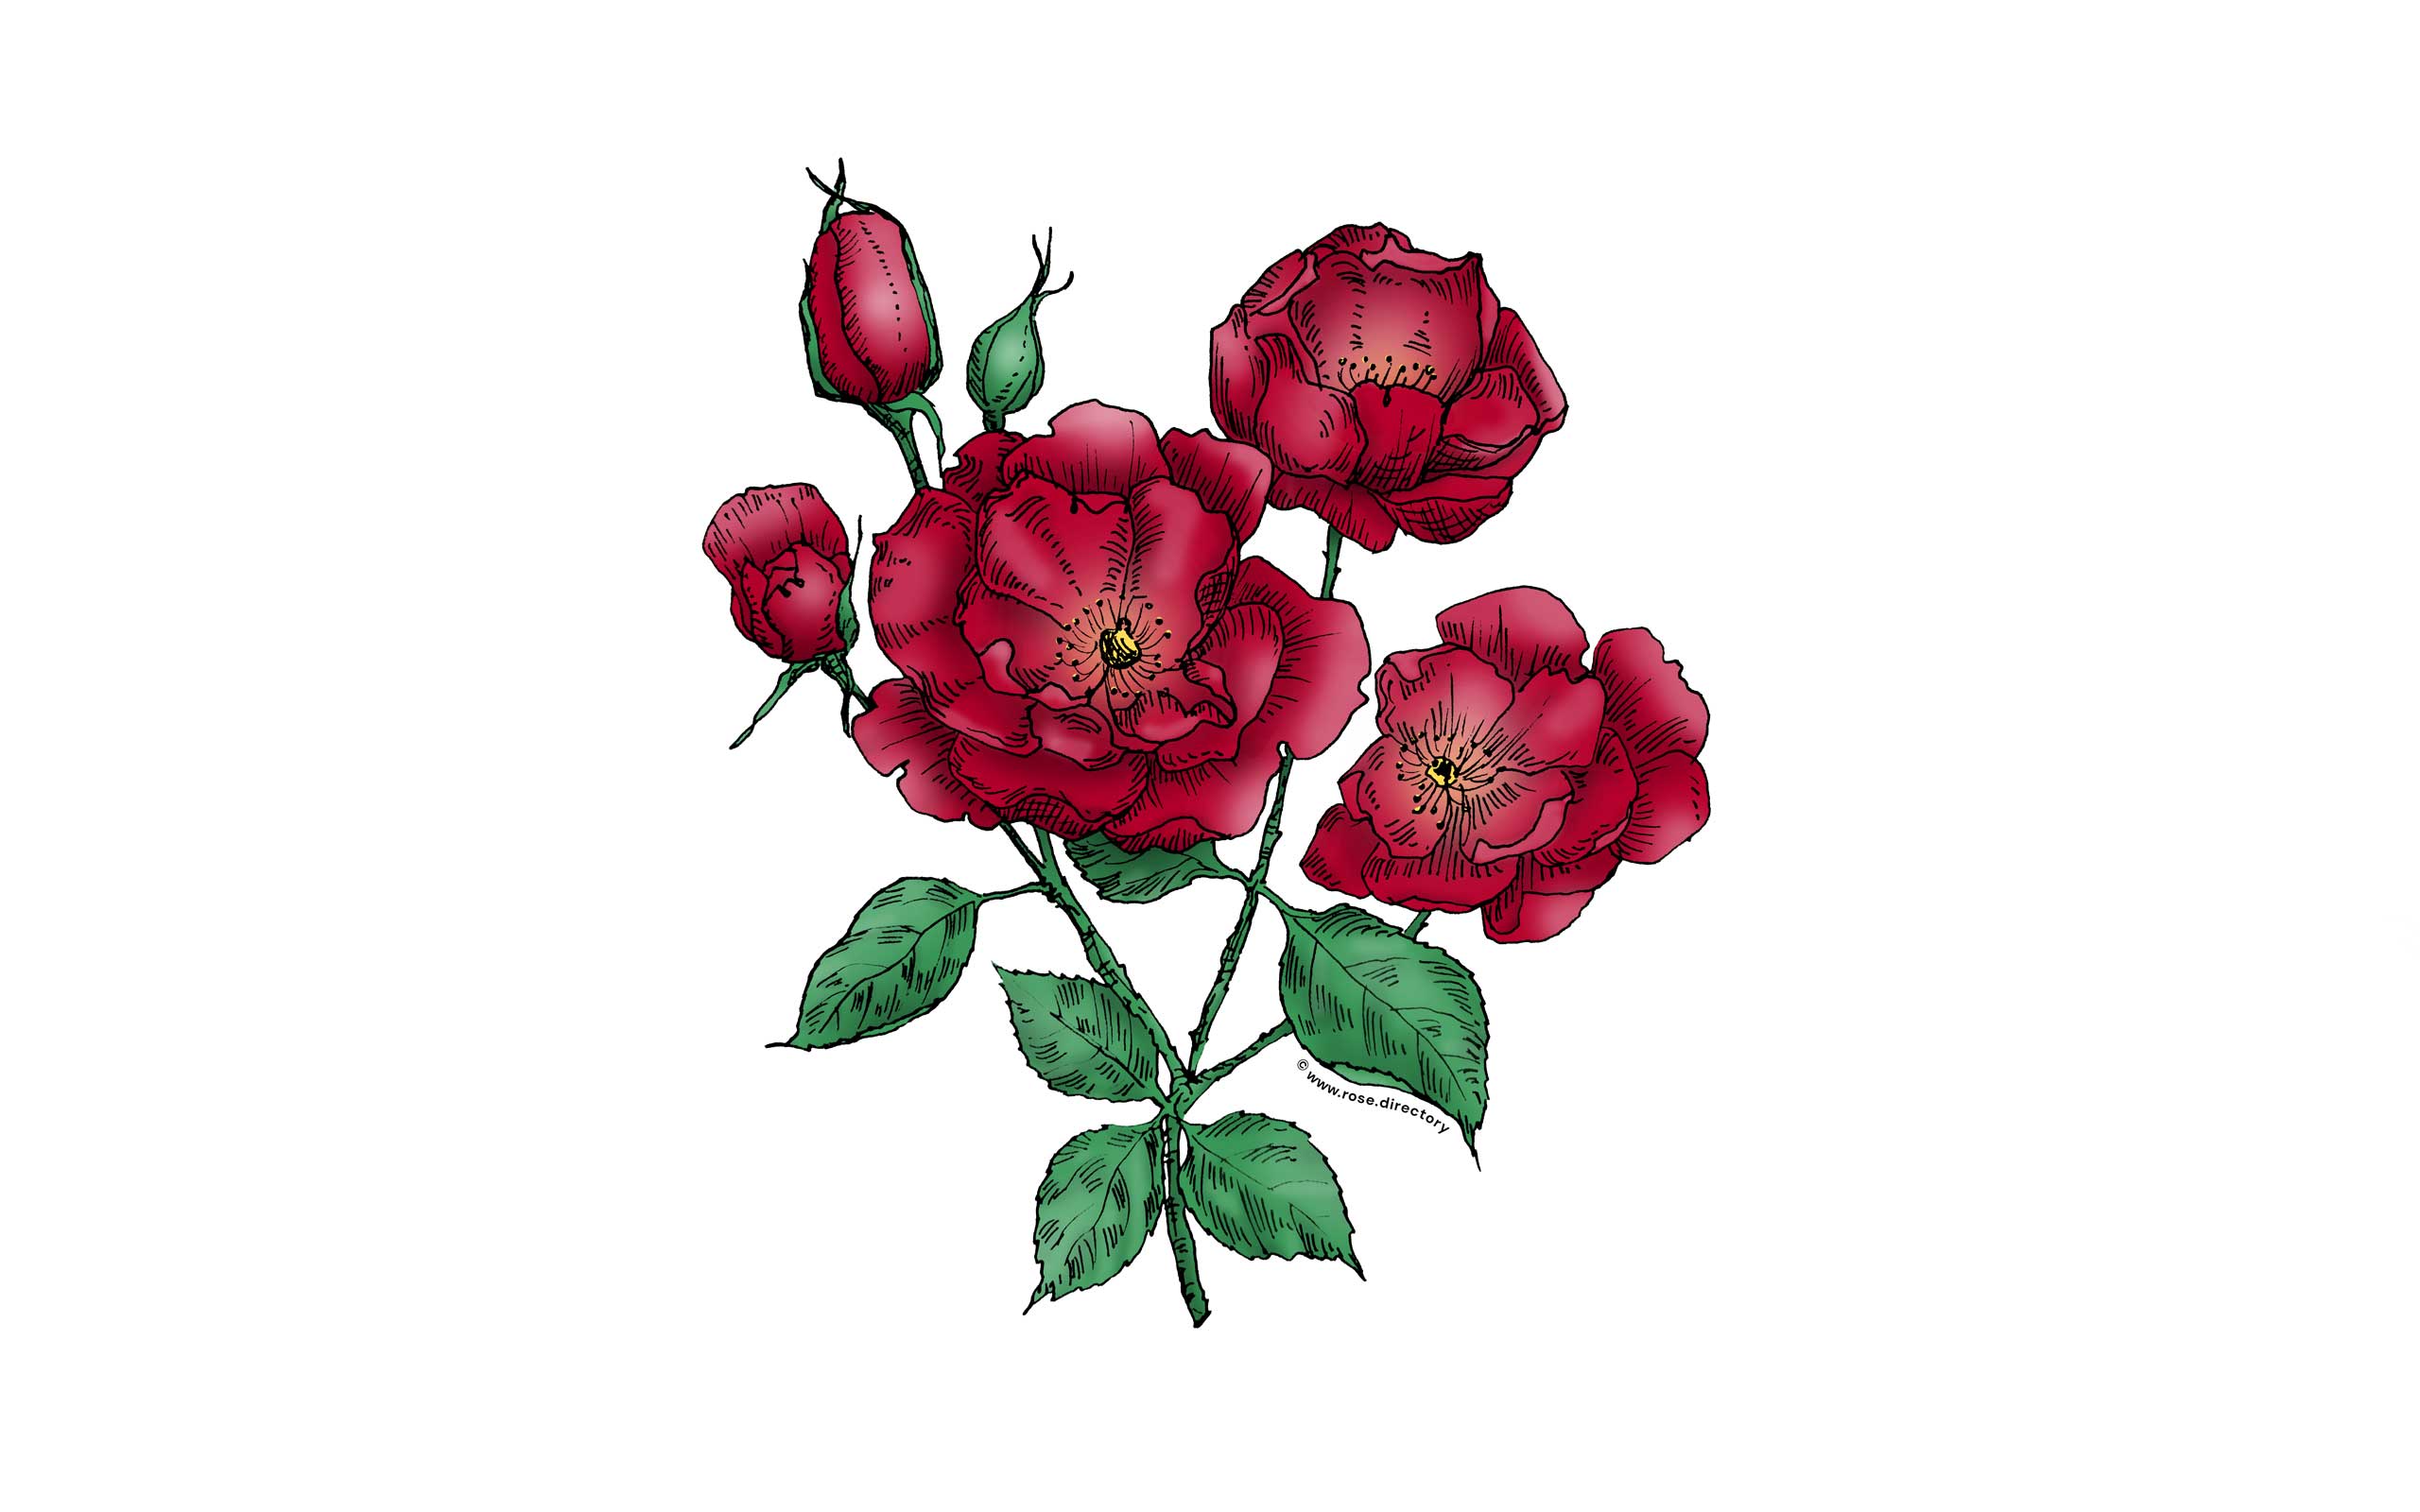 Dark Red Flat Rose Bloom Semi-Double 8-15 Petals In 2 Rows